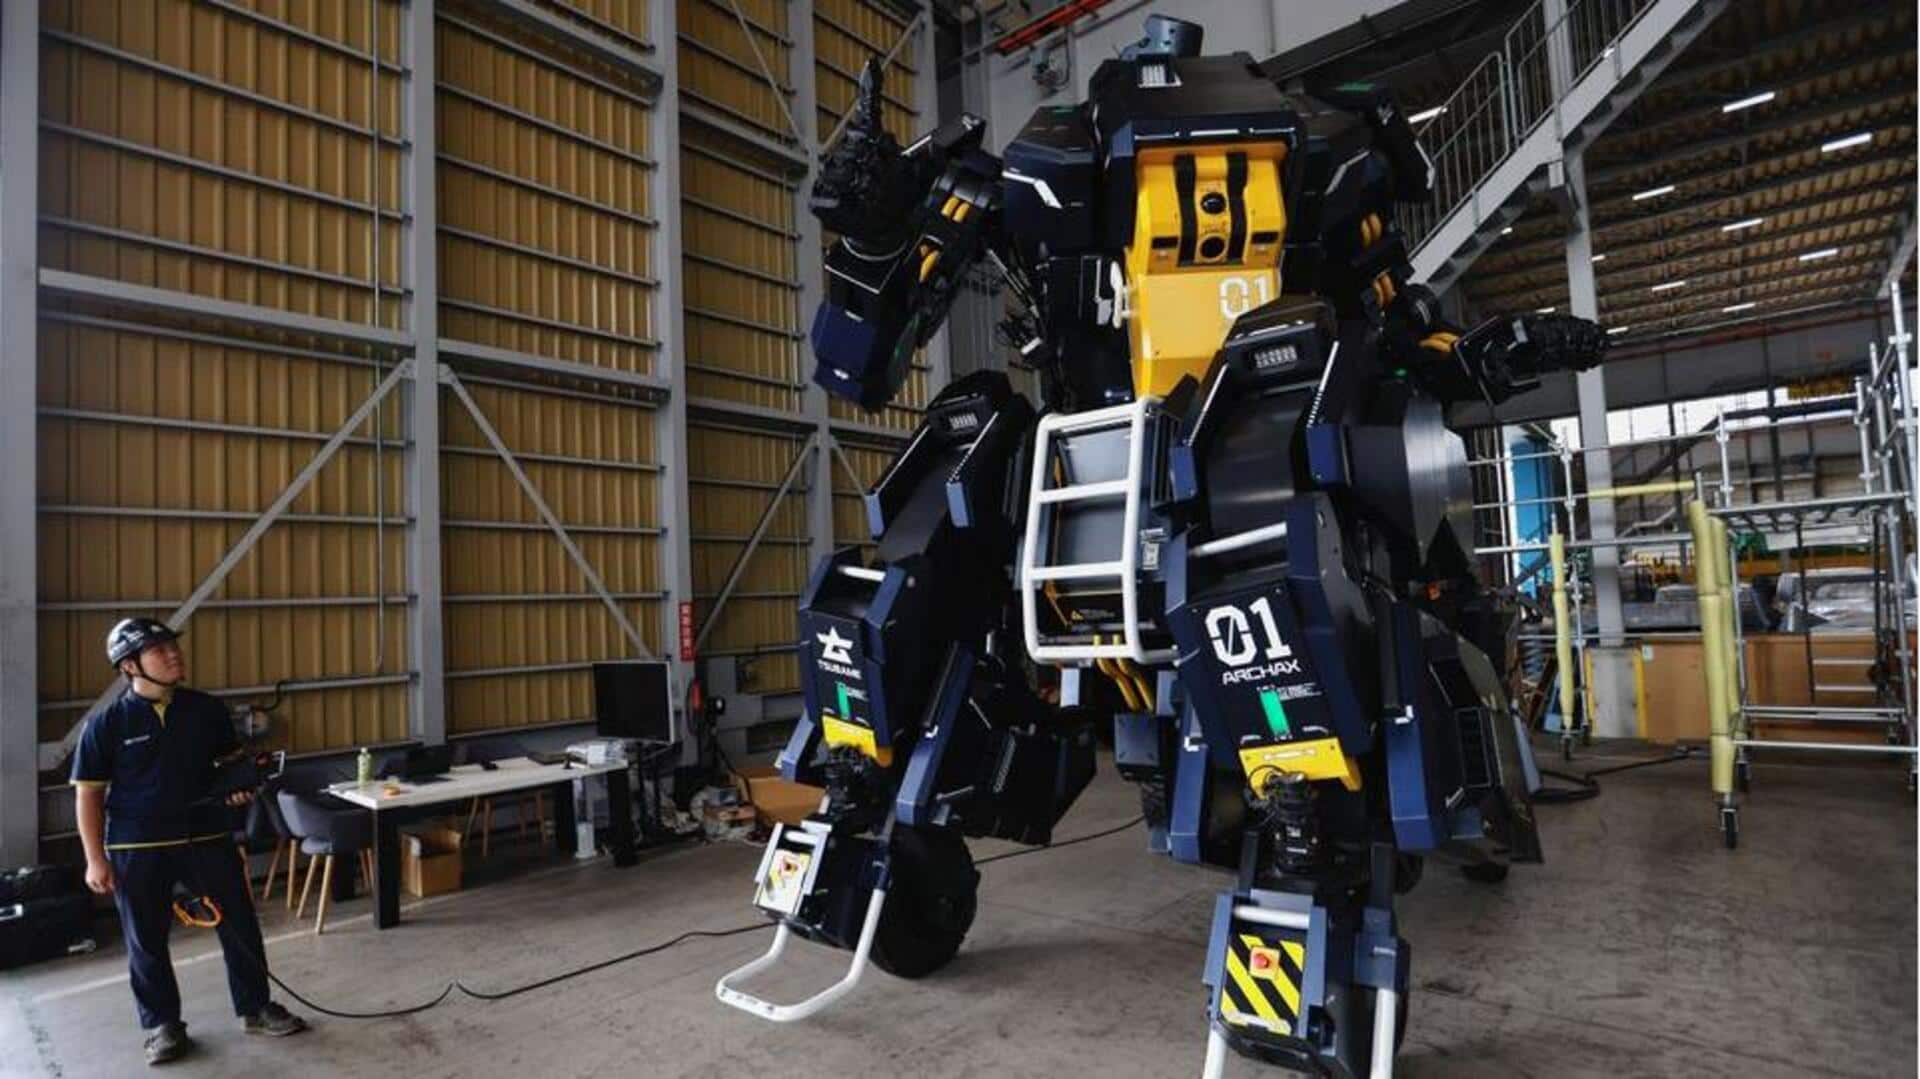 Japanese start-up creates $3 million robot inspired by anime series